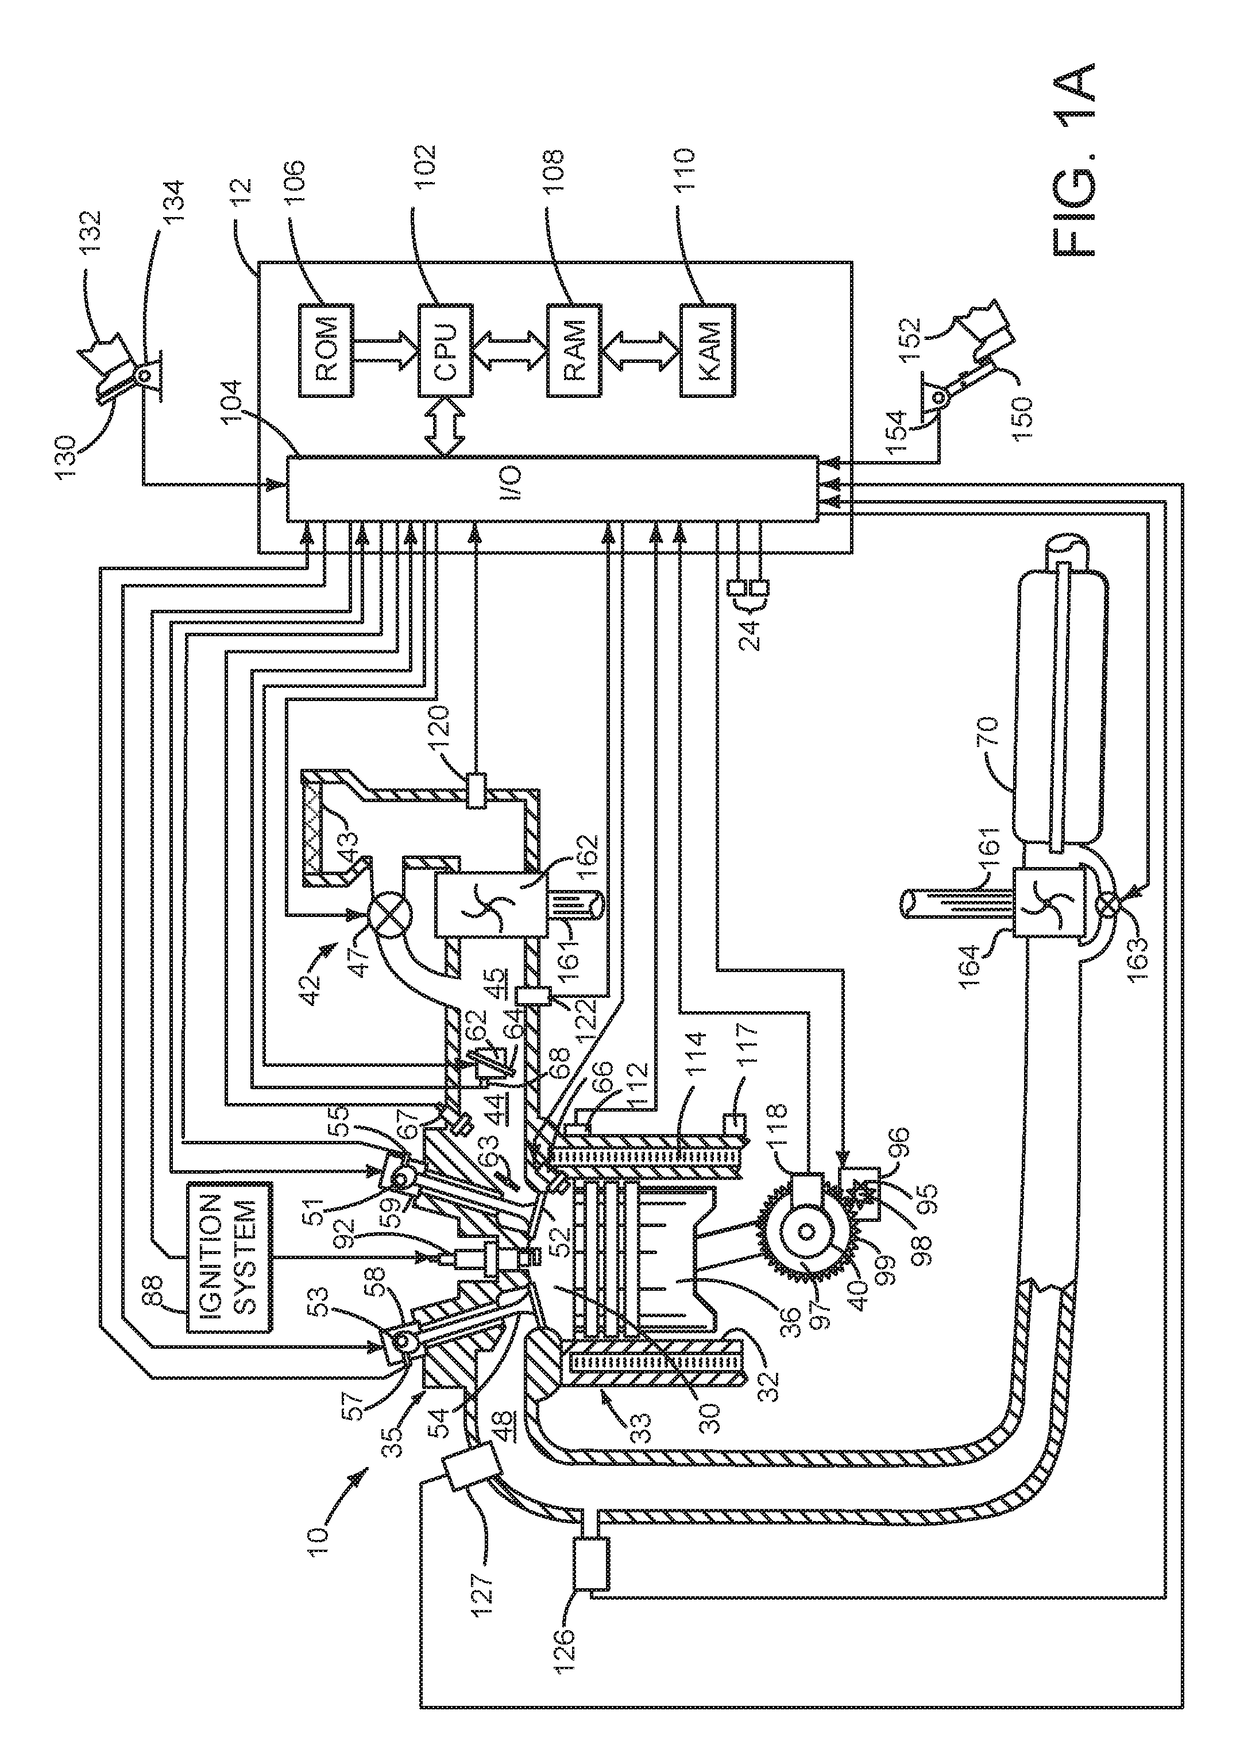 System and method for adjusting intake manifold pressure